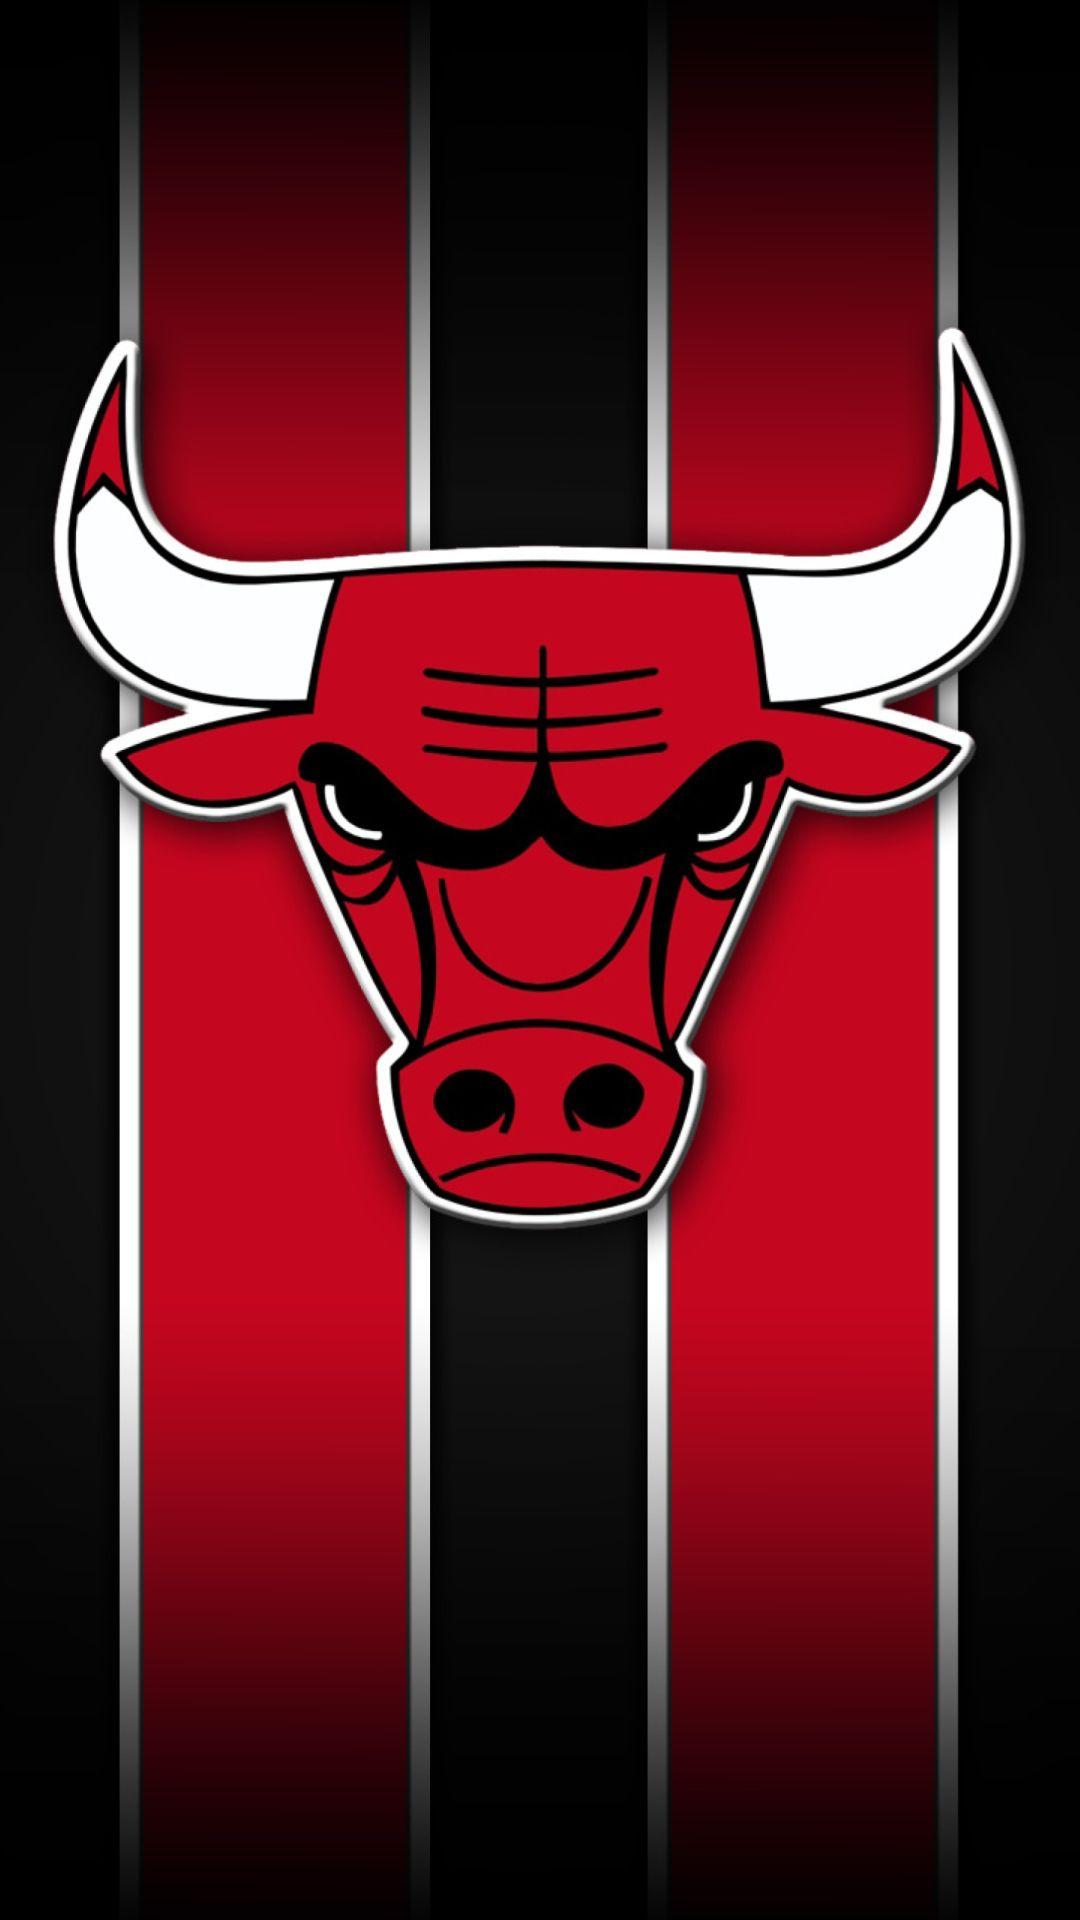 Chicago bulls wallpaper iphone download. Chicago bulls wallpaper